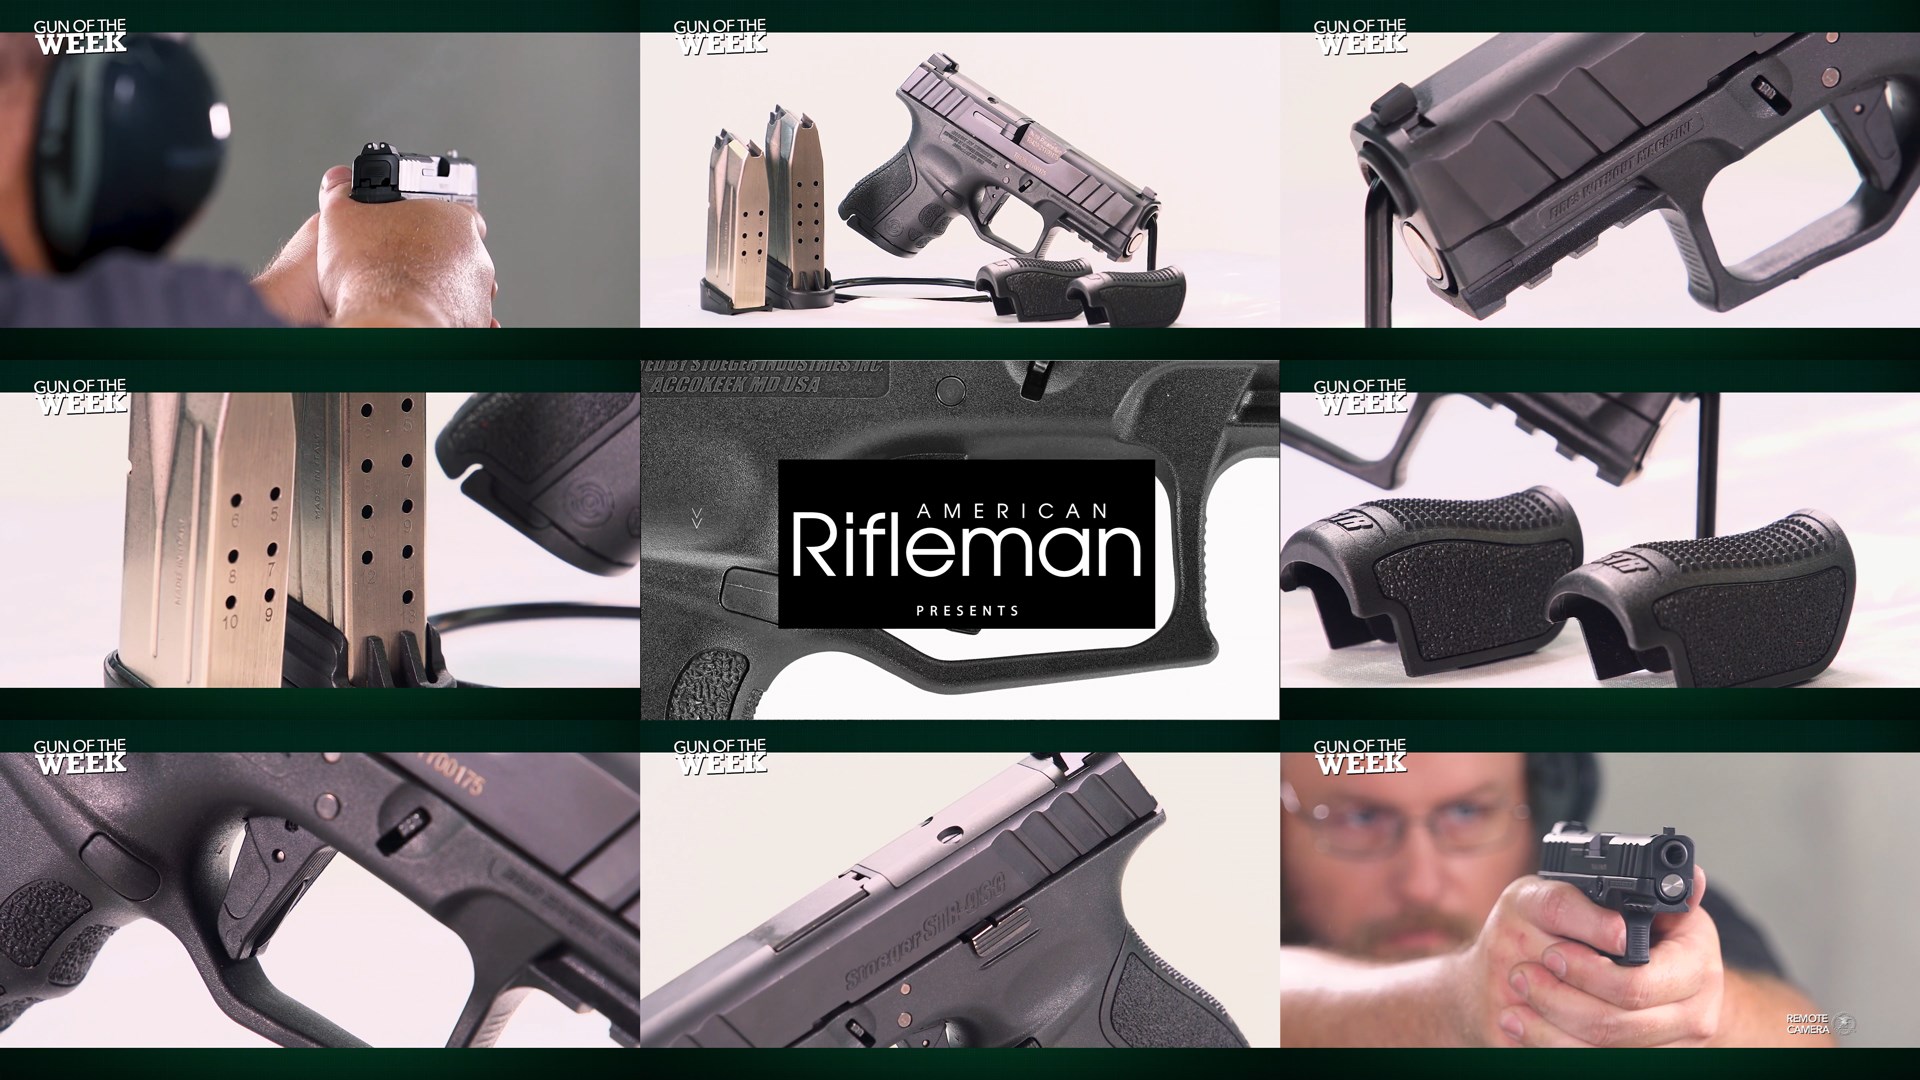 AMERICAN RIFLEMAN PRESENTS Stoeger STR-9SC semi-automatic pistol compilation mosaic tiles 9 images arranged detail closeup man shooting